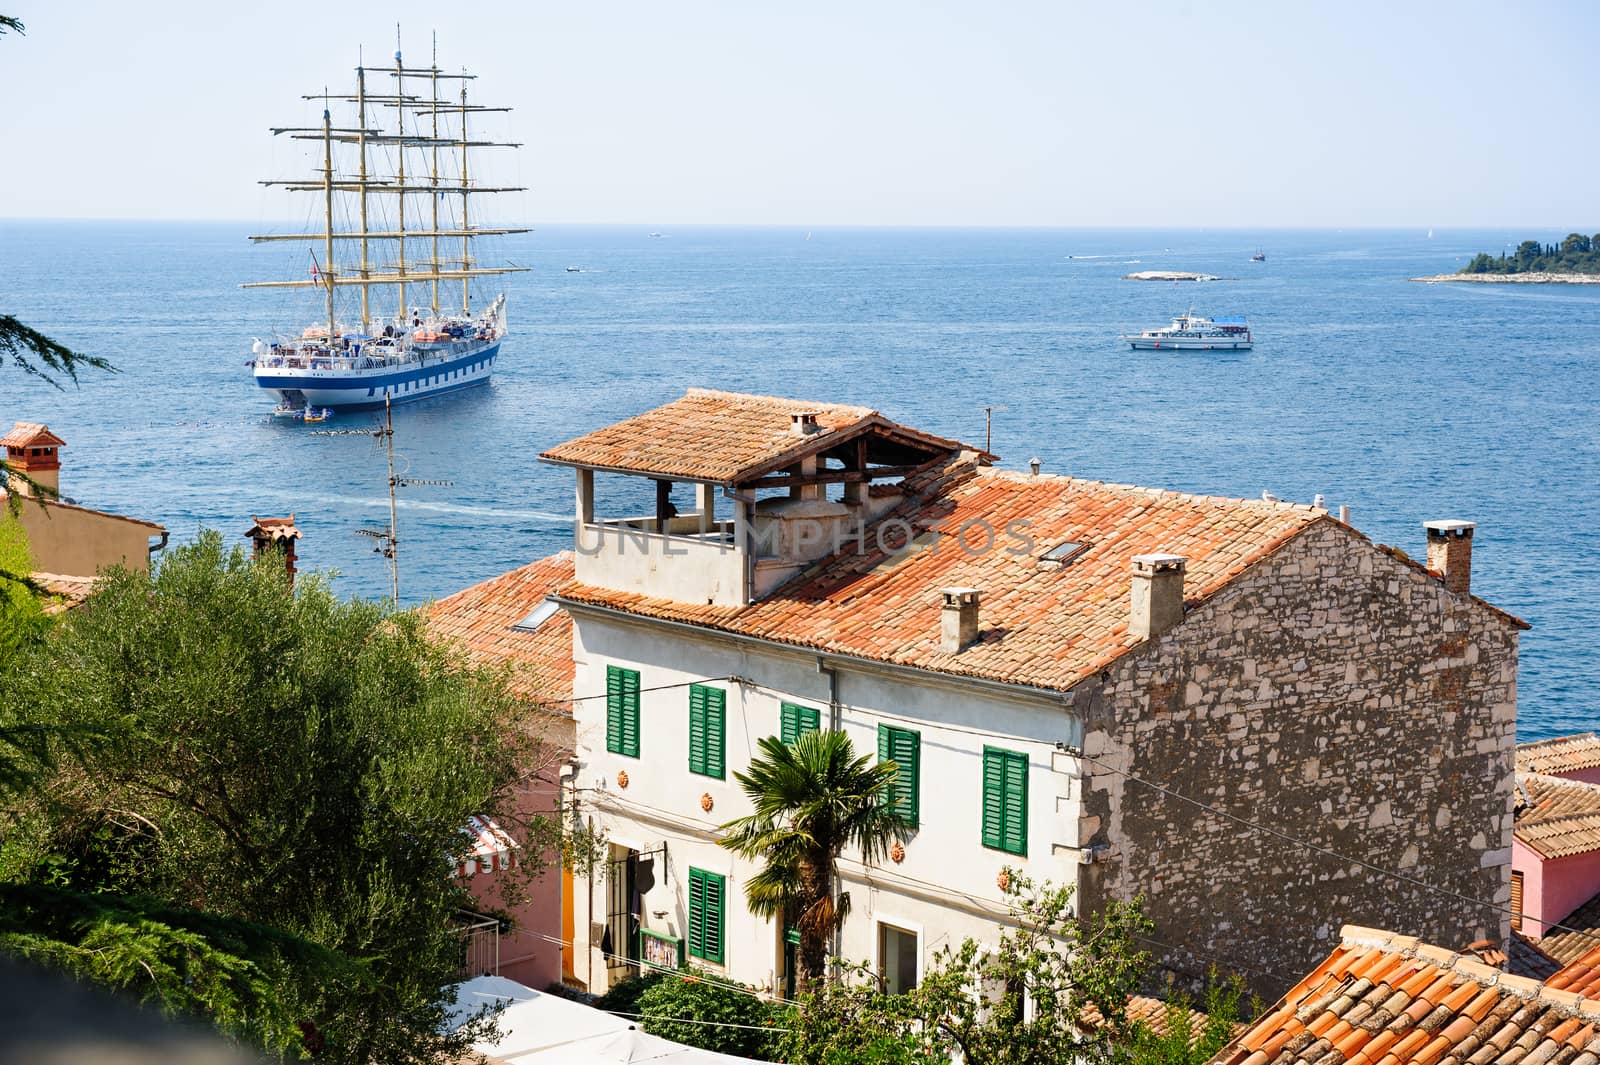 View from Rovinj, Croatia to Adriatic sea with ship